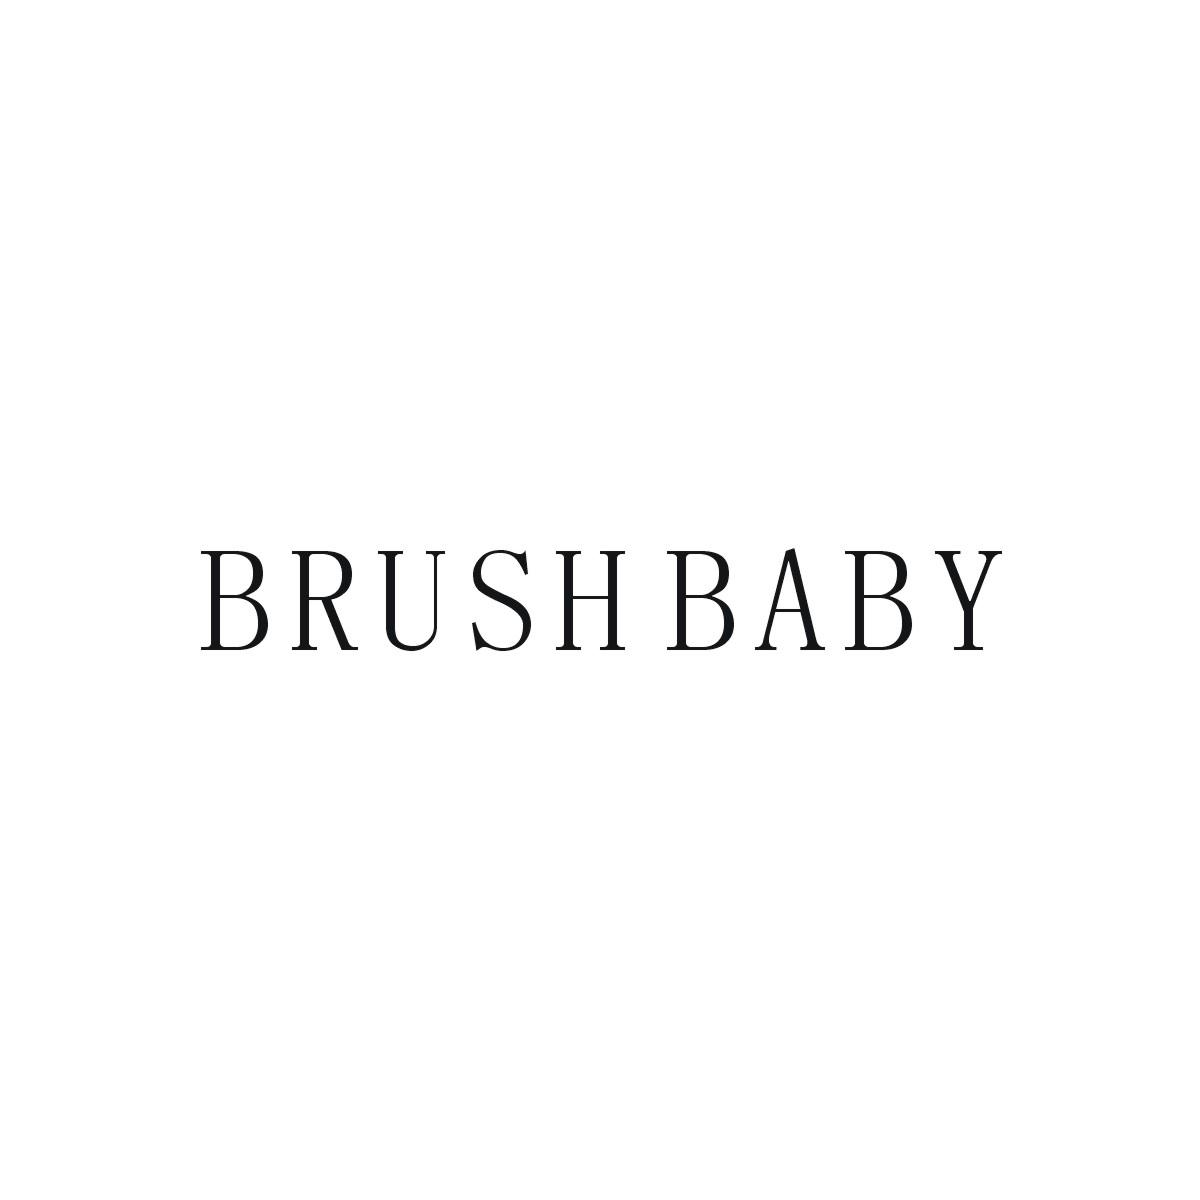 BRUSH BABY搓衣板商标转让费用买卖交易流程